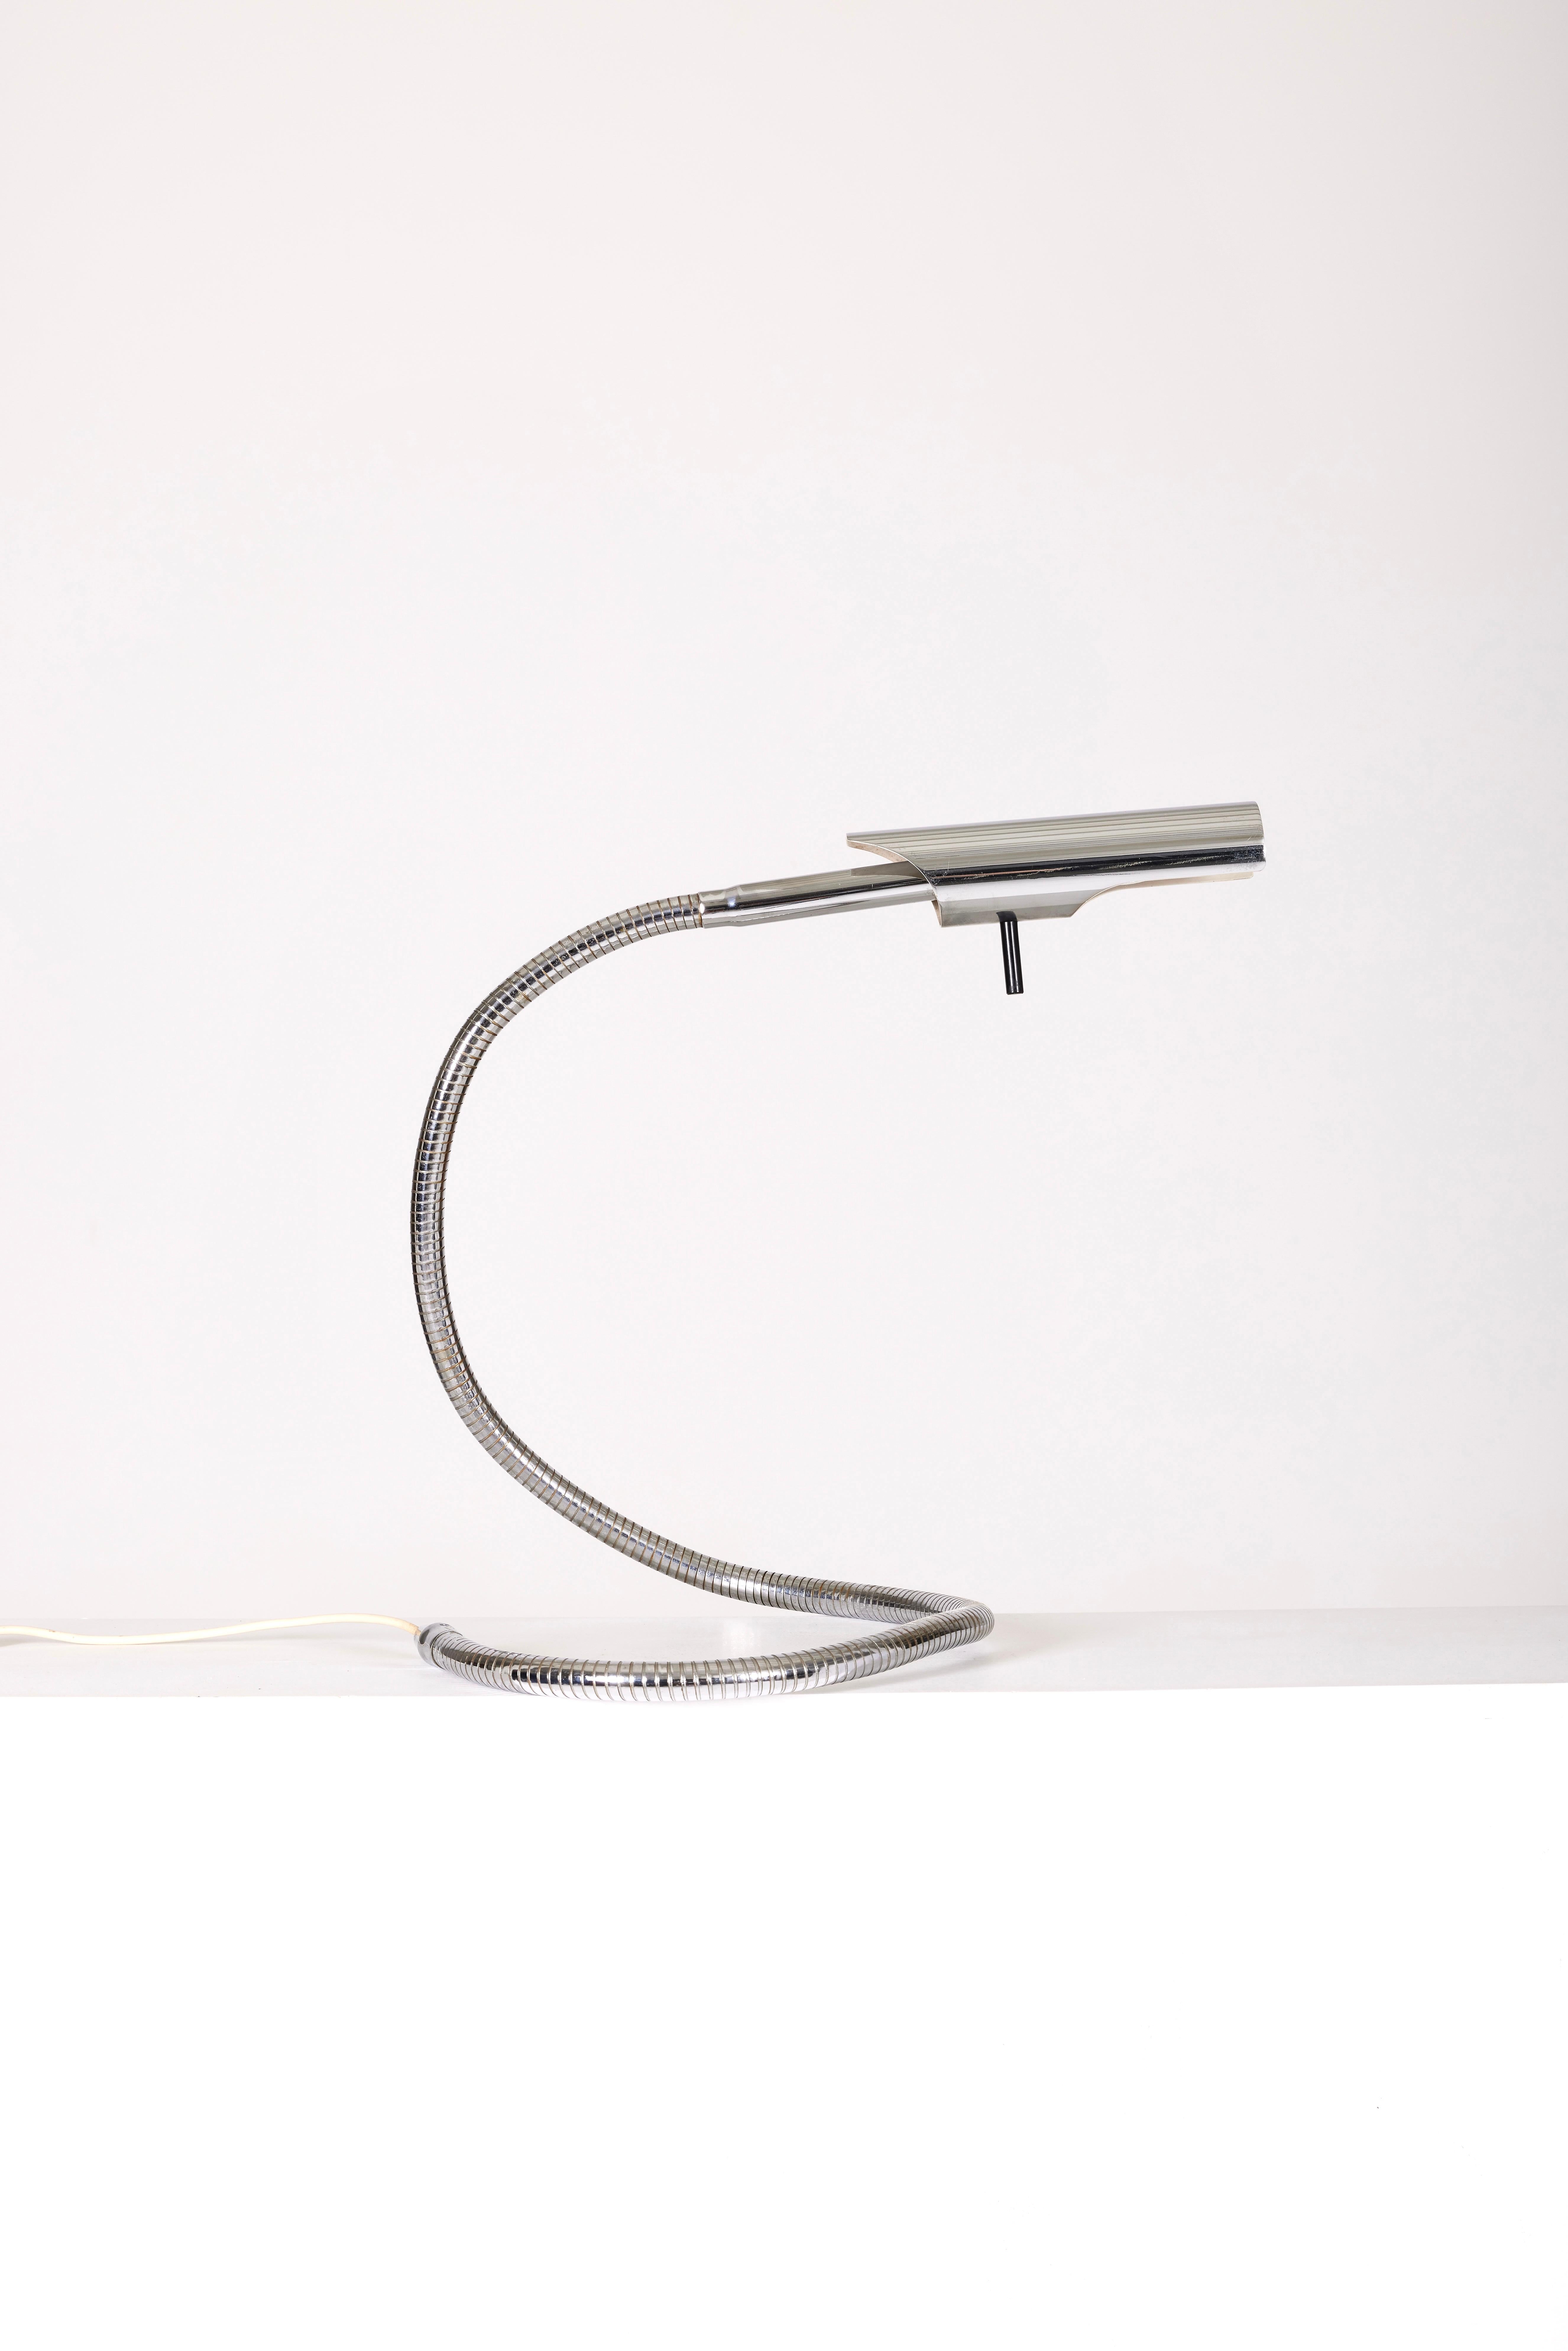 Aluminum lamp by the french designer Etienne Fermigier For Sale 3